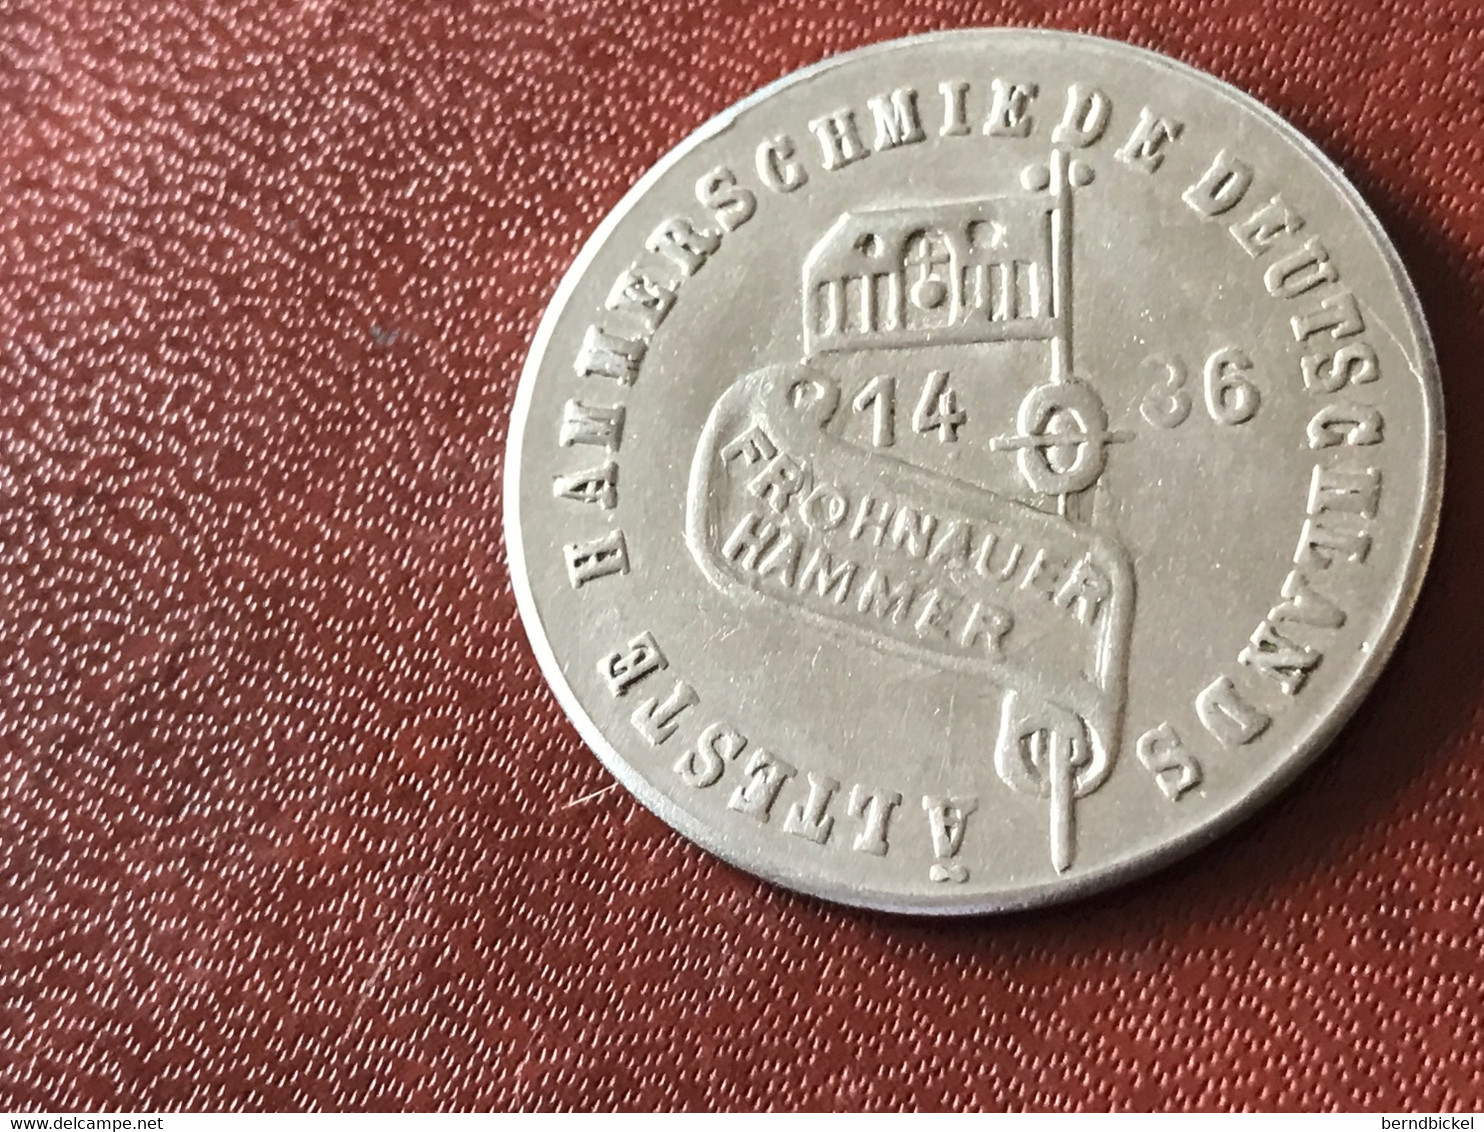 Münze Medaille Frohnauer Hammer 1436 - Elongated Coins